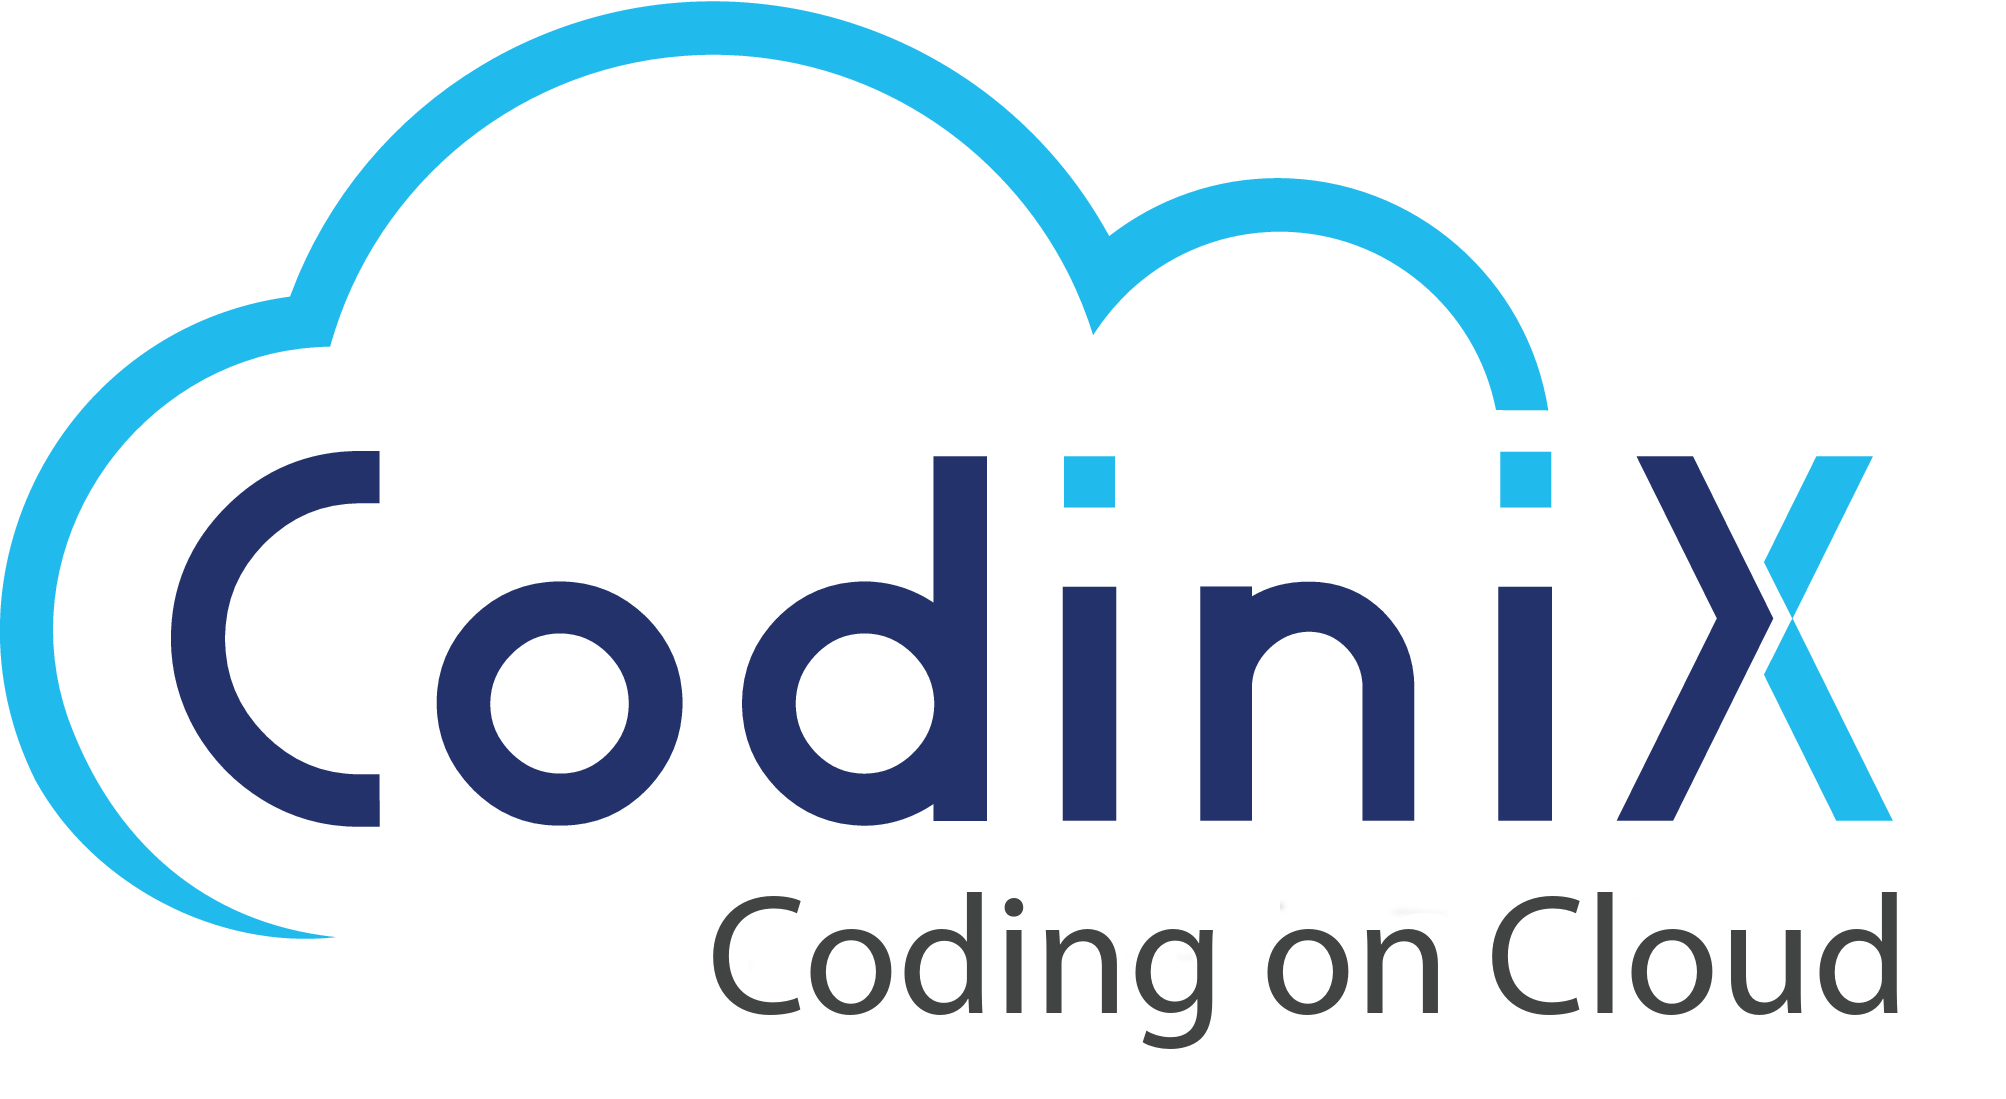 Codinix Technologies Inc